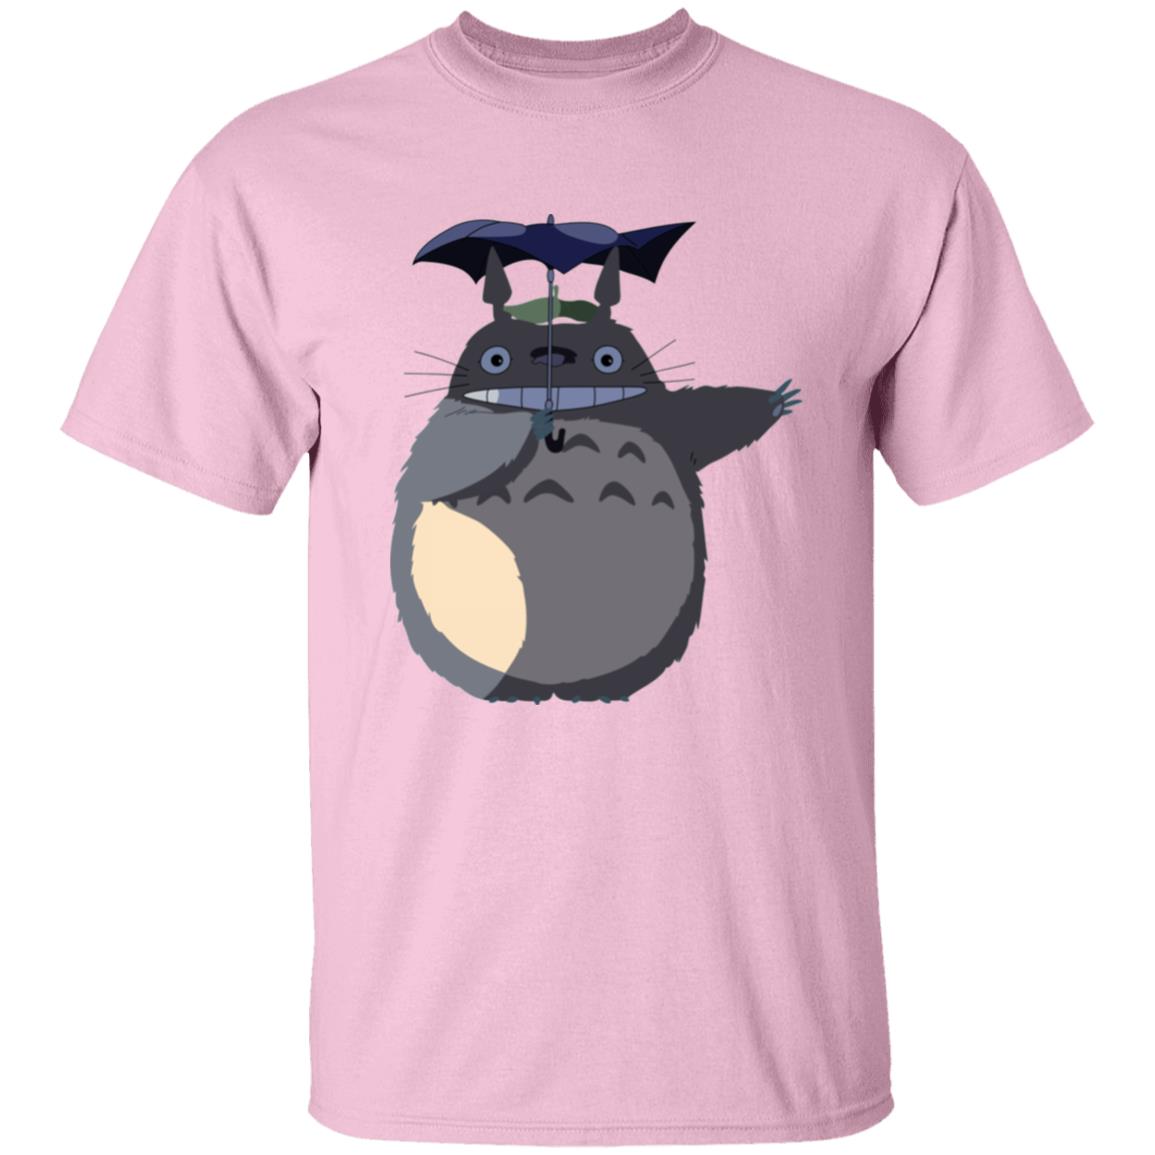 My Neighbor Totoro With Umbrella T Shirt